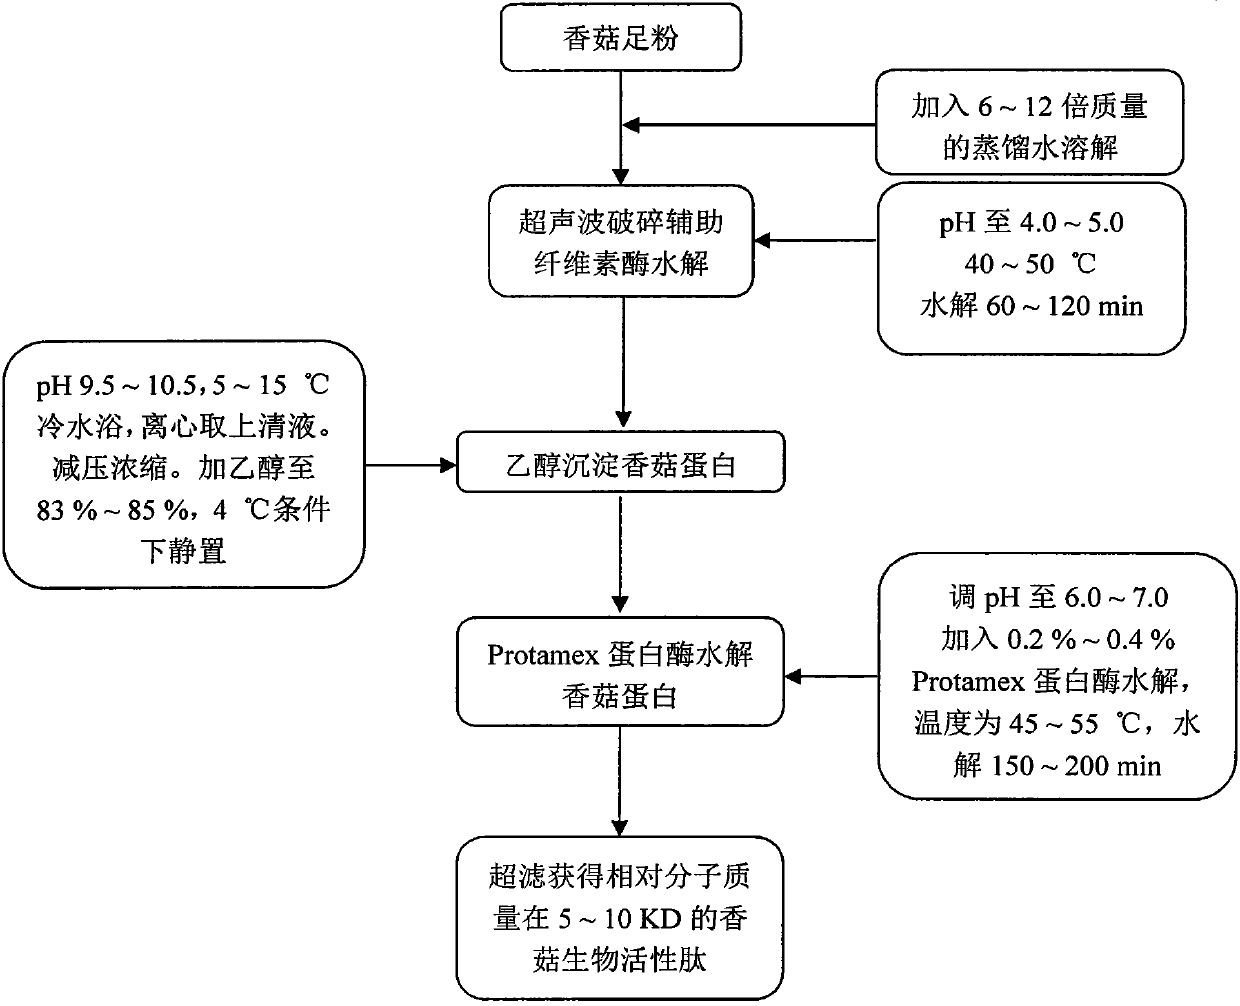 Method for preparing shiitake bioactive peptide